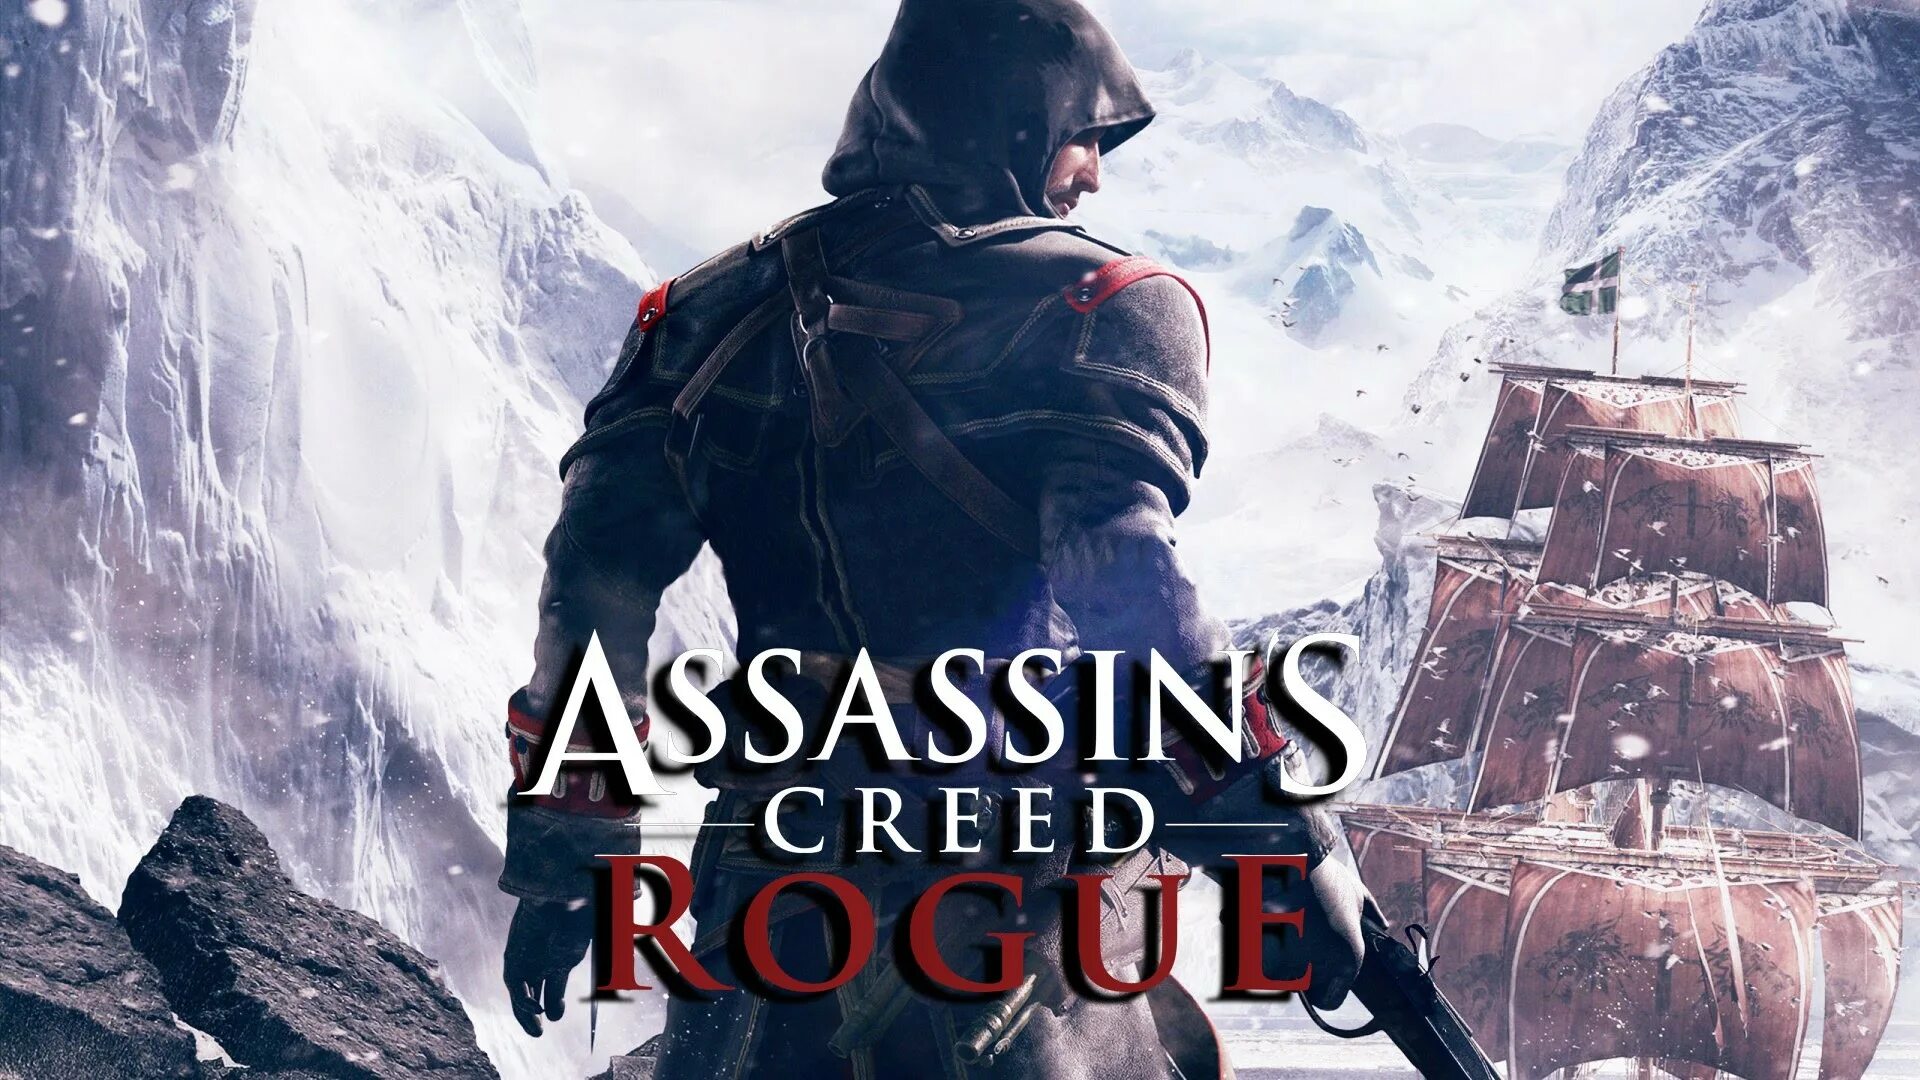 Assassins Creed rouge обложка. Assassin s Creed Rogue обложка.